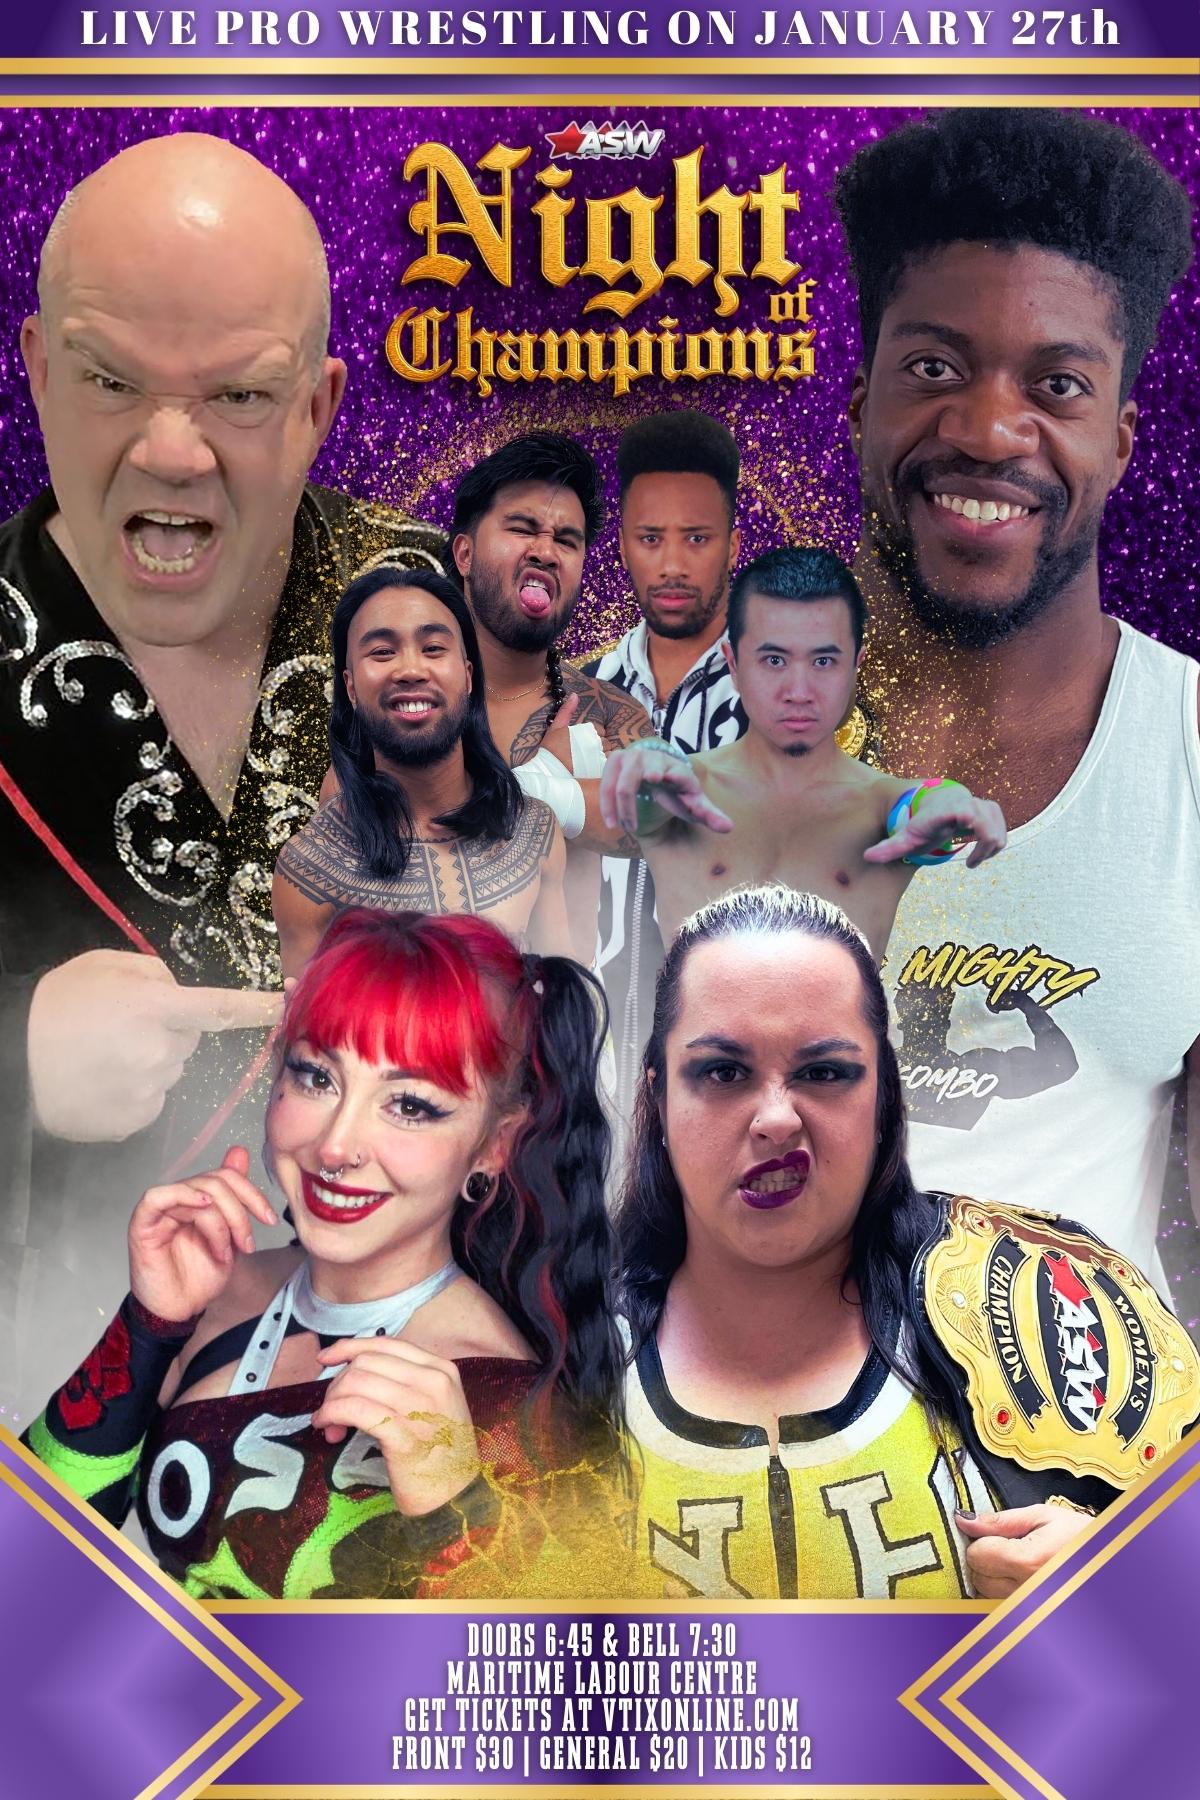 All Star Wrestling presents Night of Champions